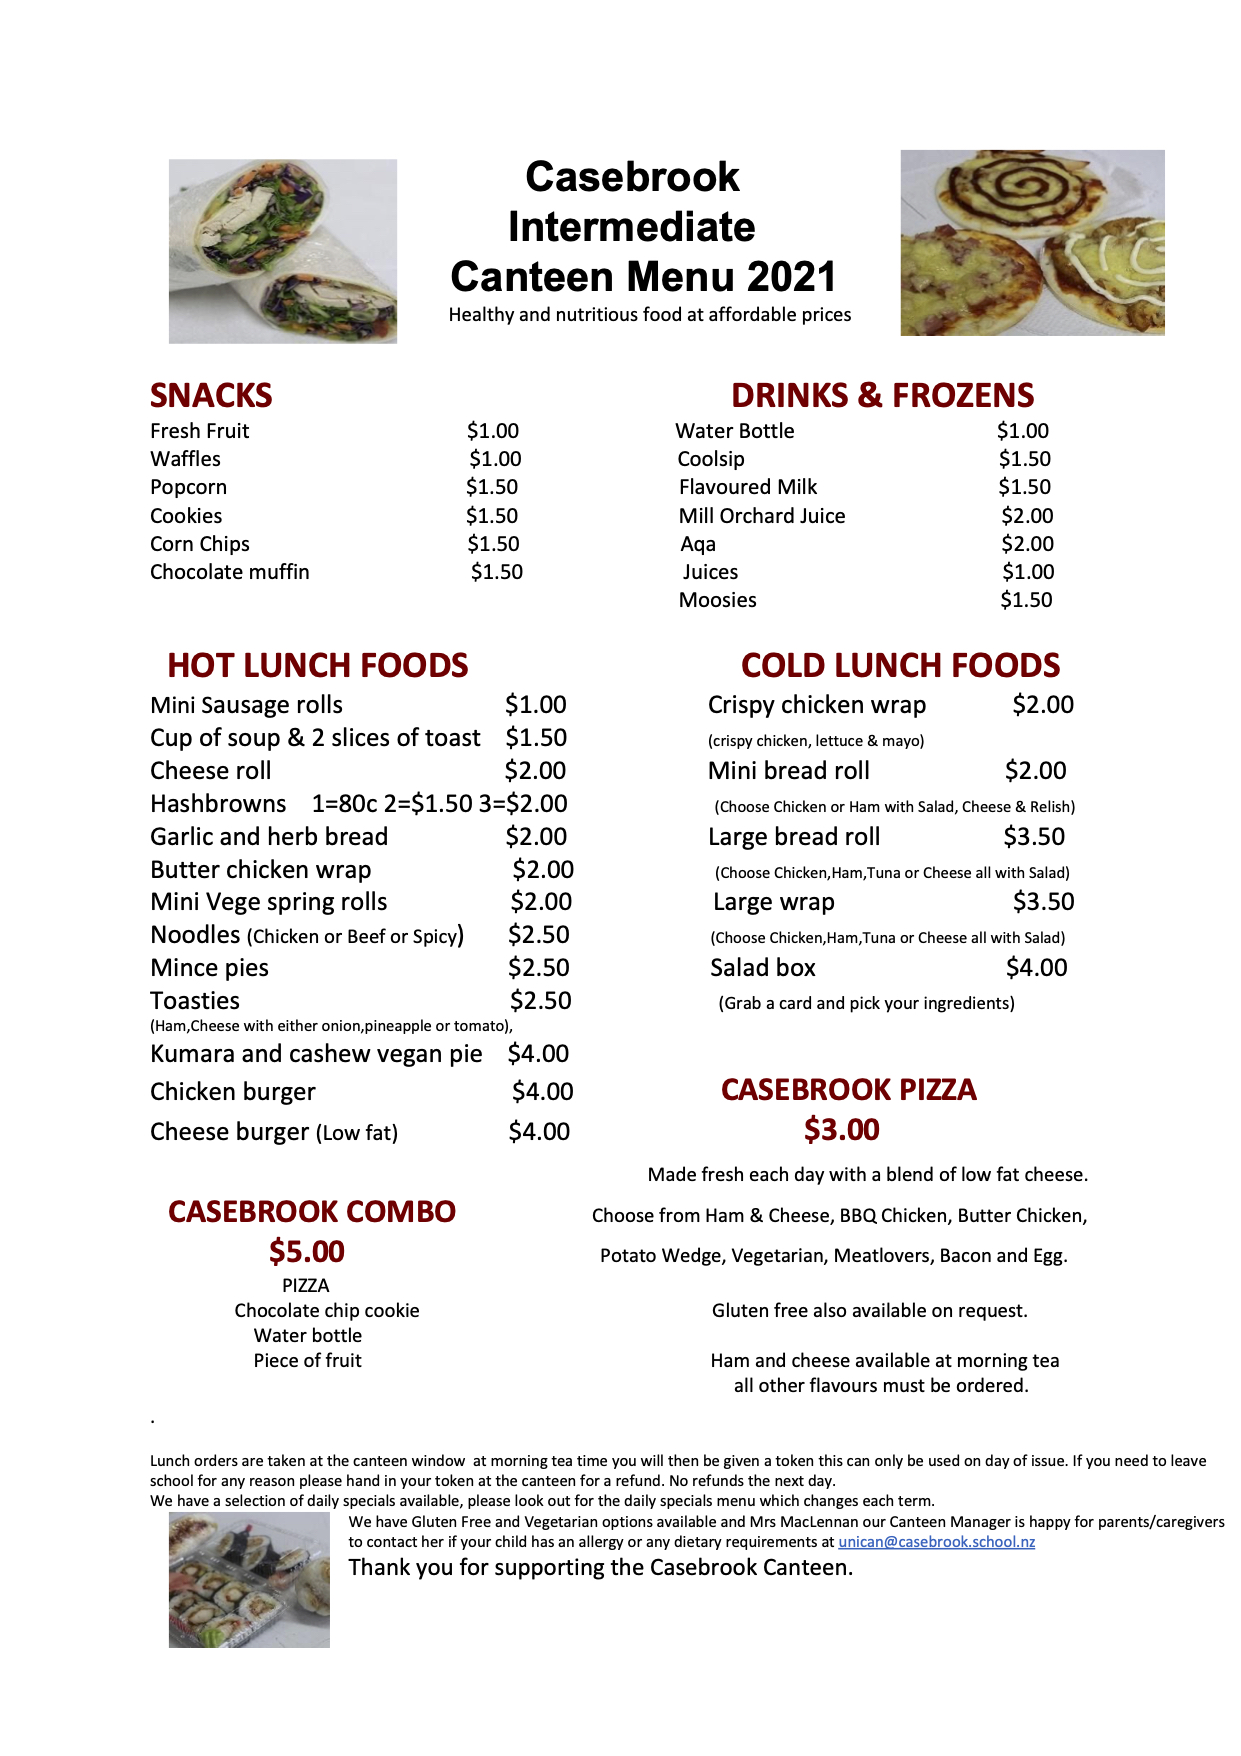 casebrook canteen menu 2021